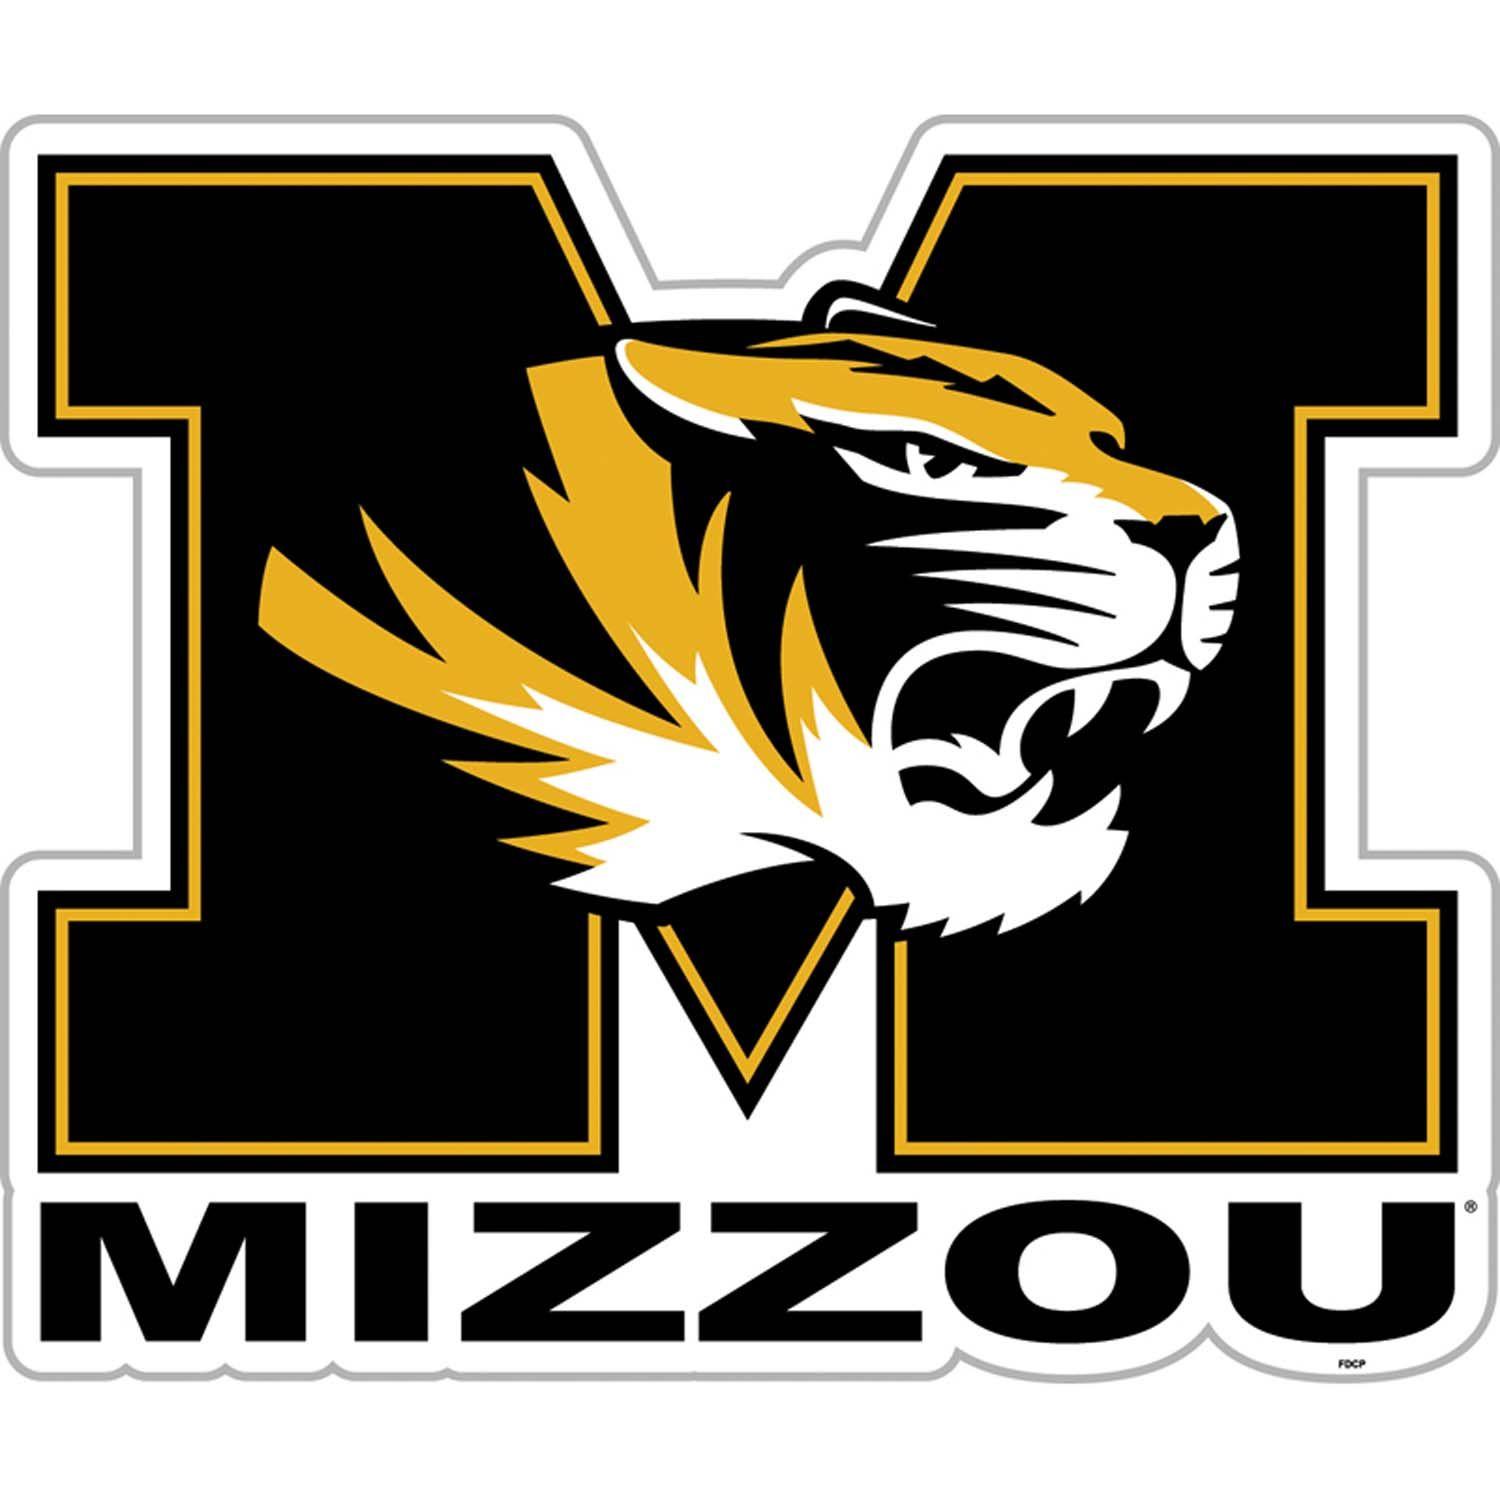 College Football Sport Team Logo - University of Missouri (Mizzou)- Tigers. Thing that make me happy